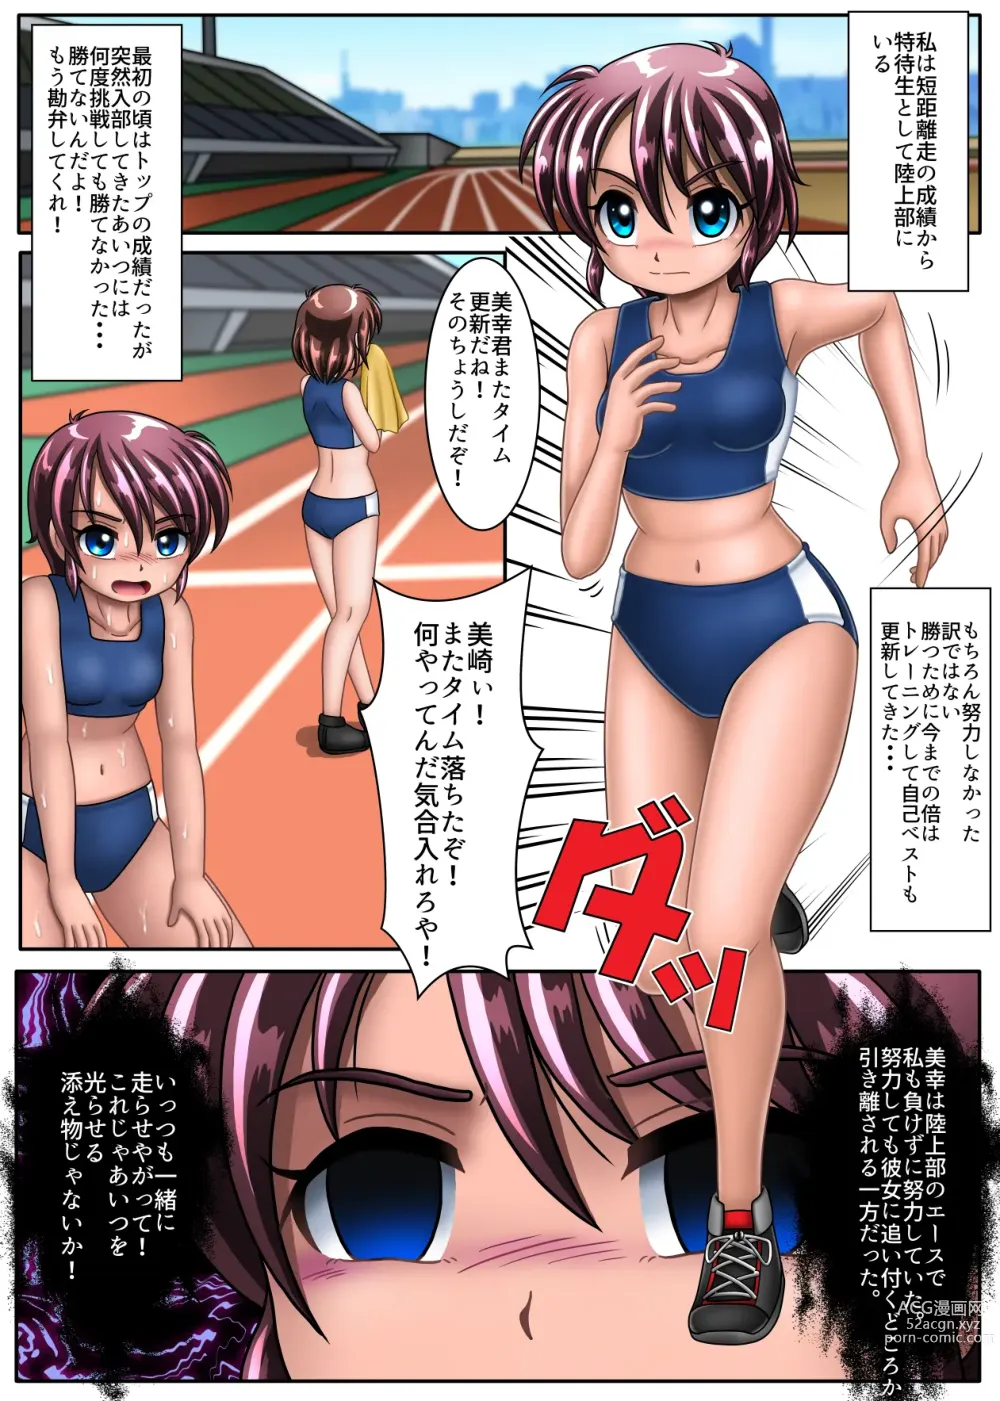 Page 2 of doujinshi Misaki-chan of Dropout